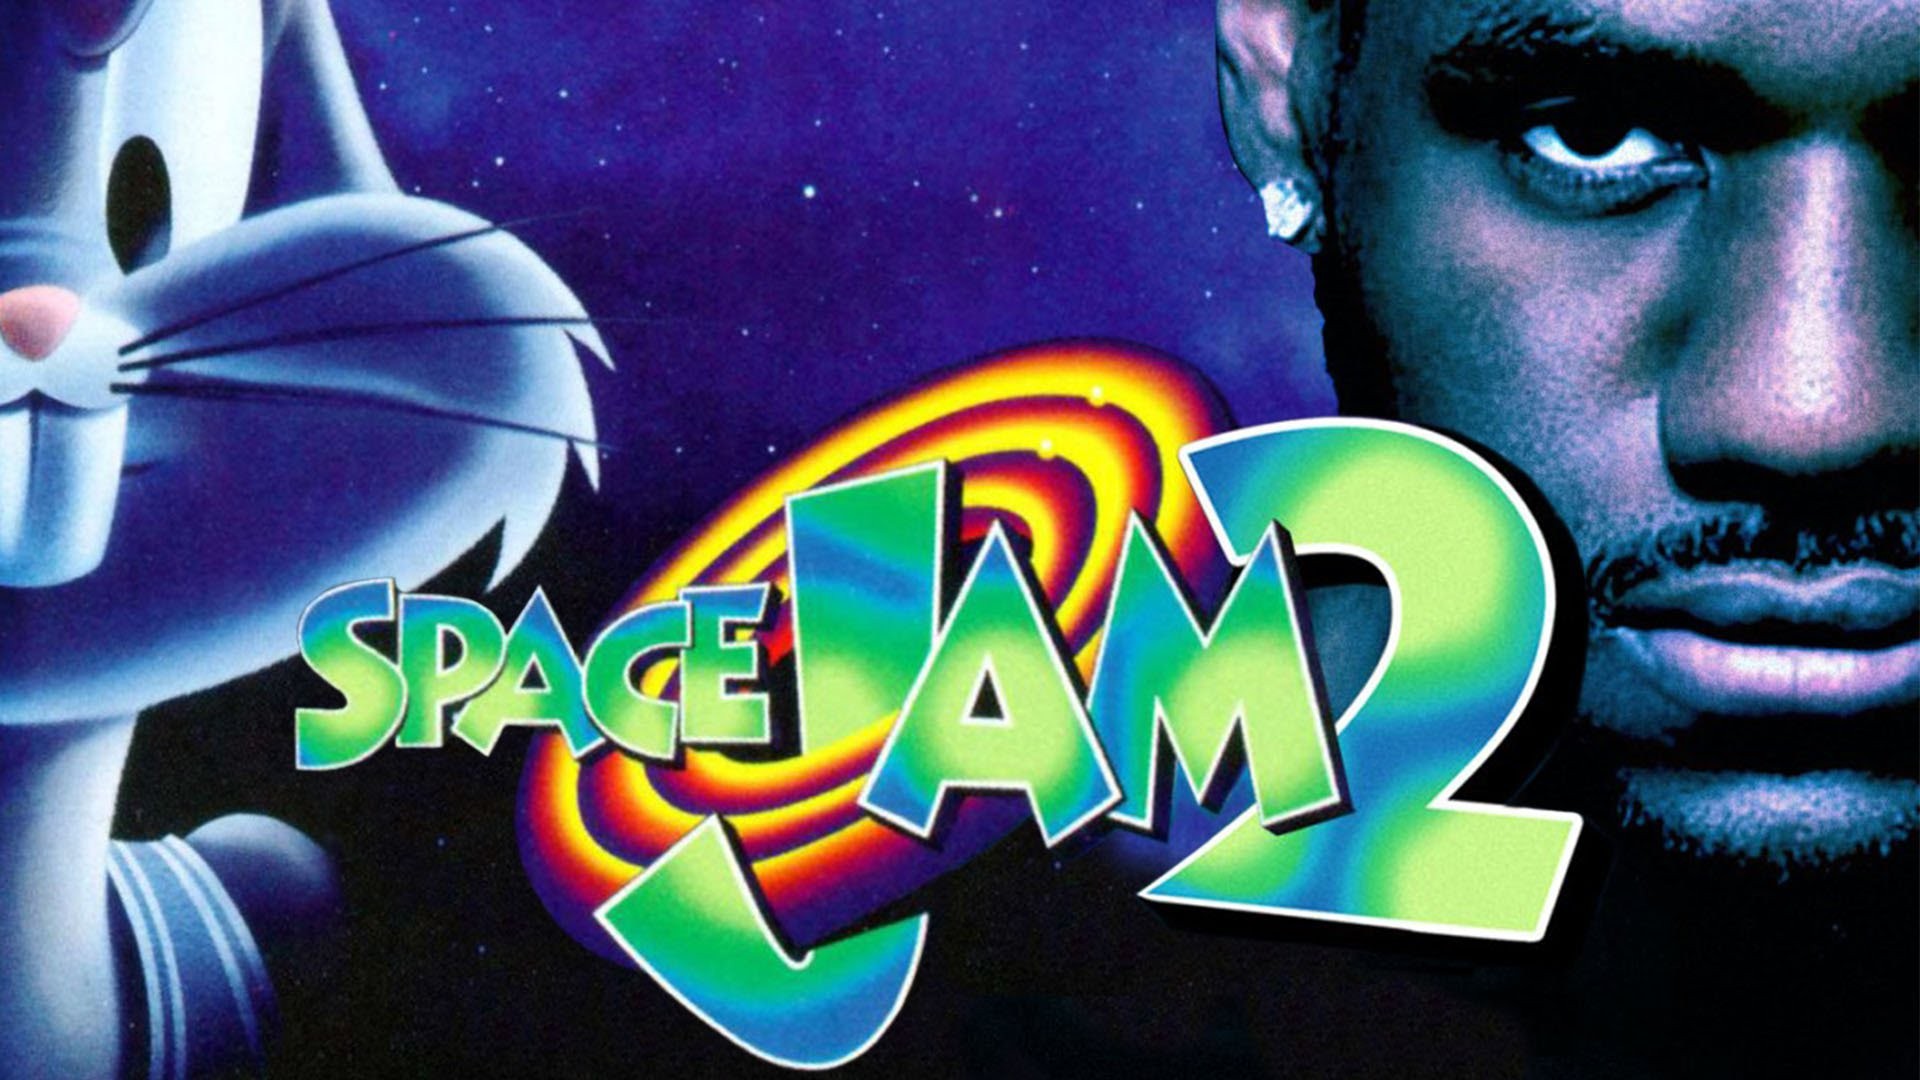 Space Jam 2 LeBron James